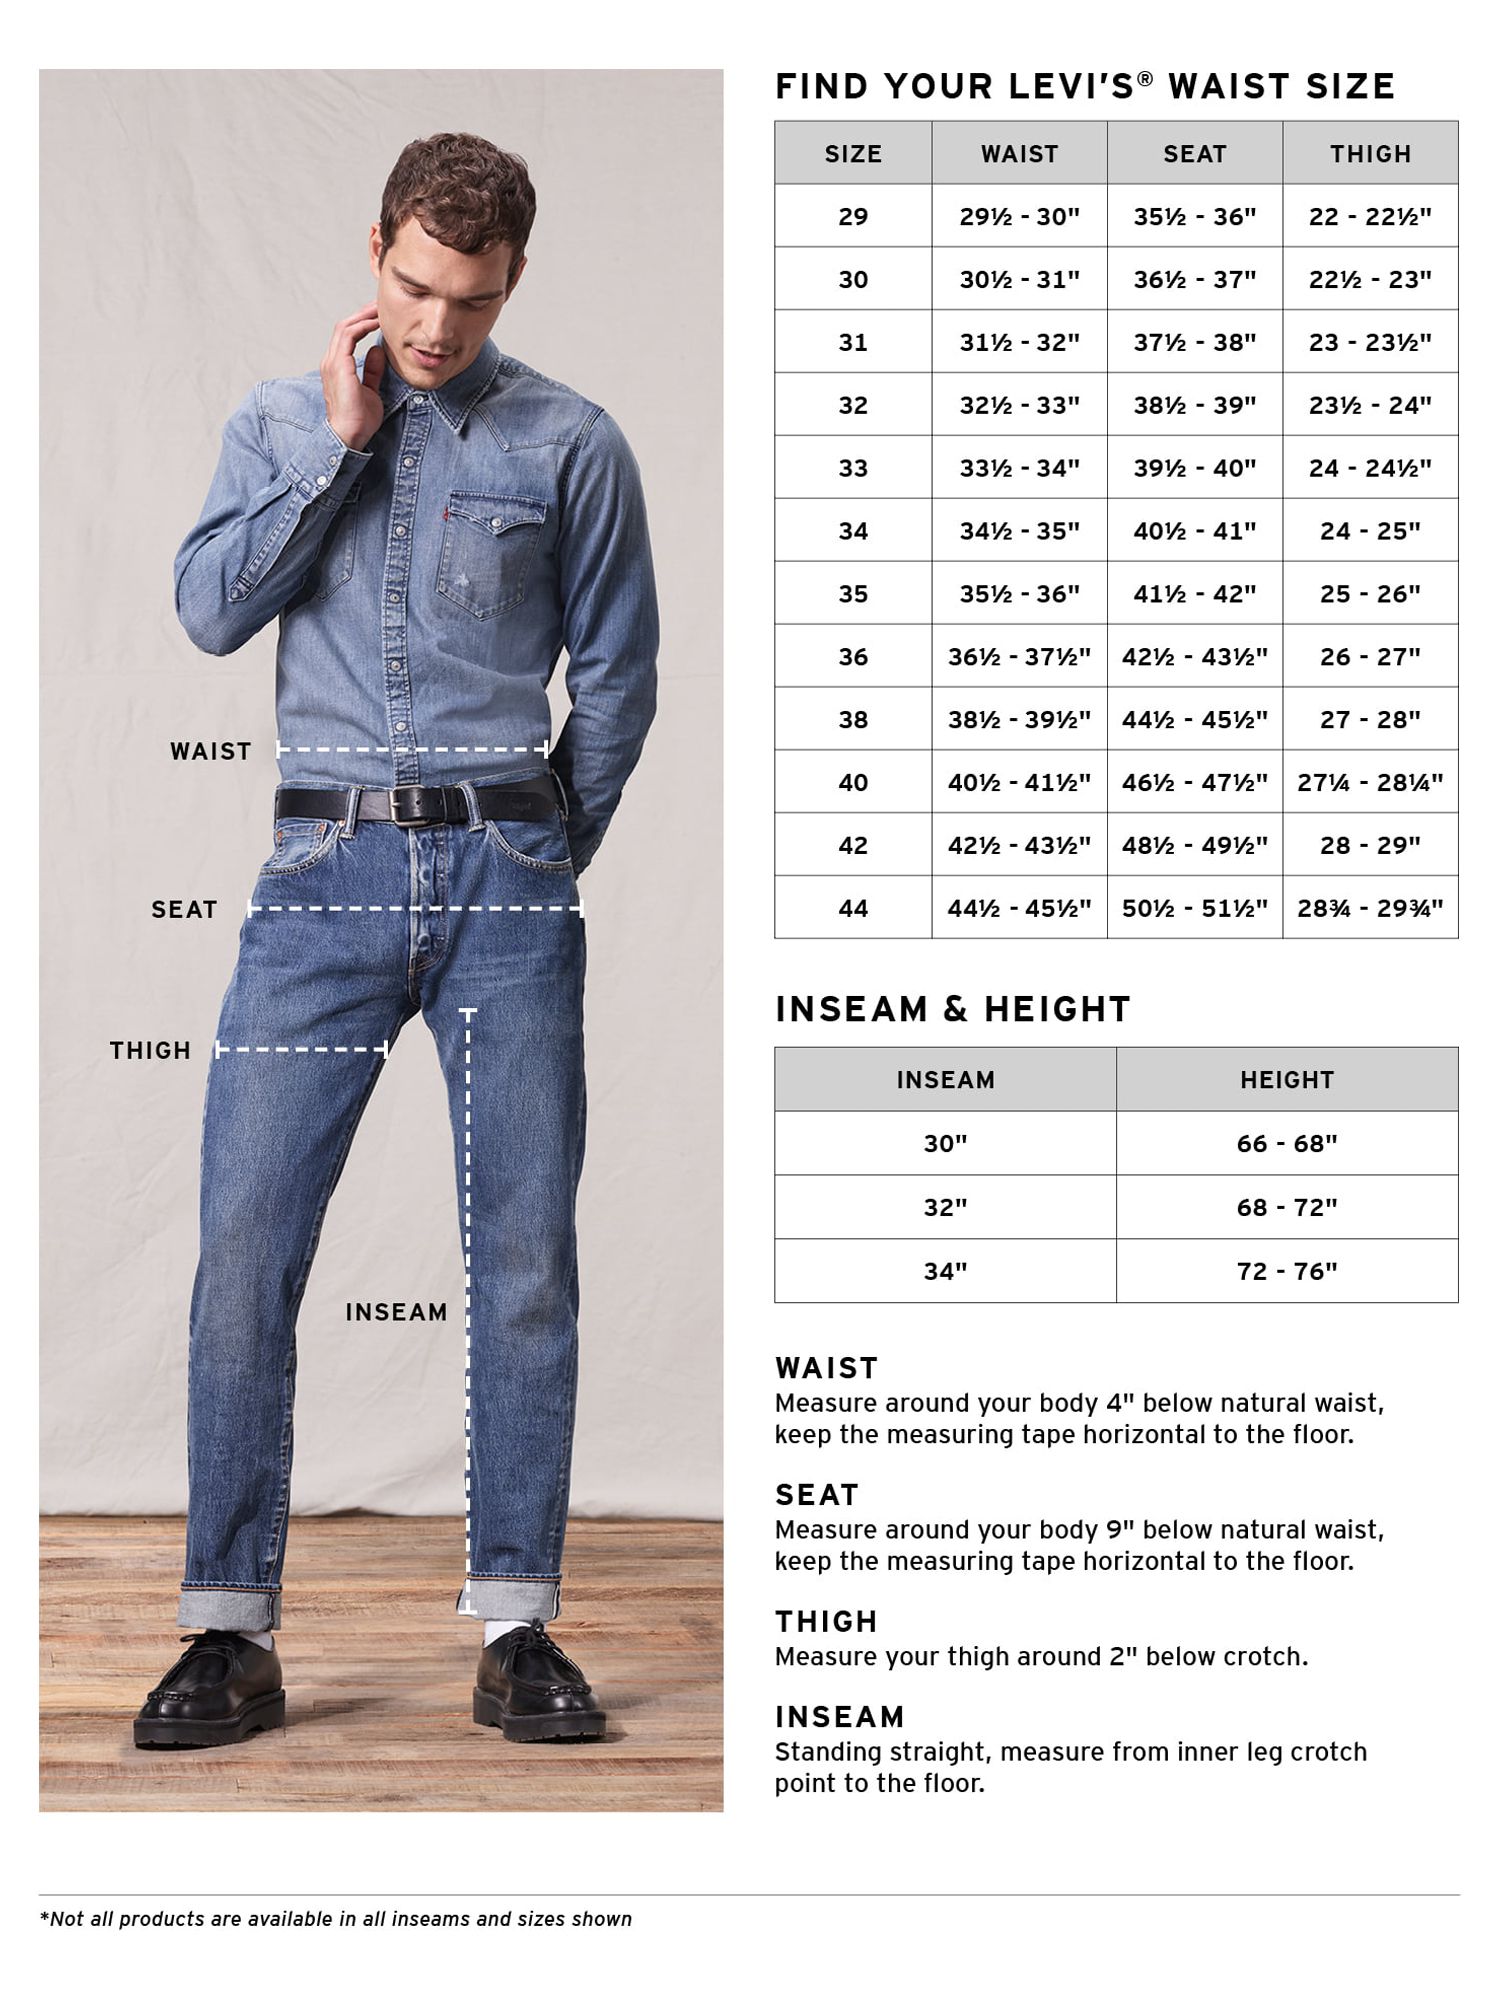 Levi's Men's 511 Slim Fit Jeans - image 5 of 9